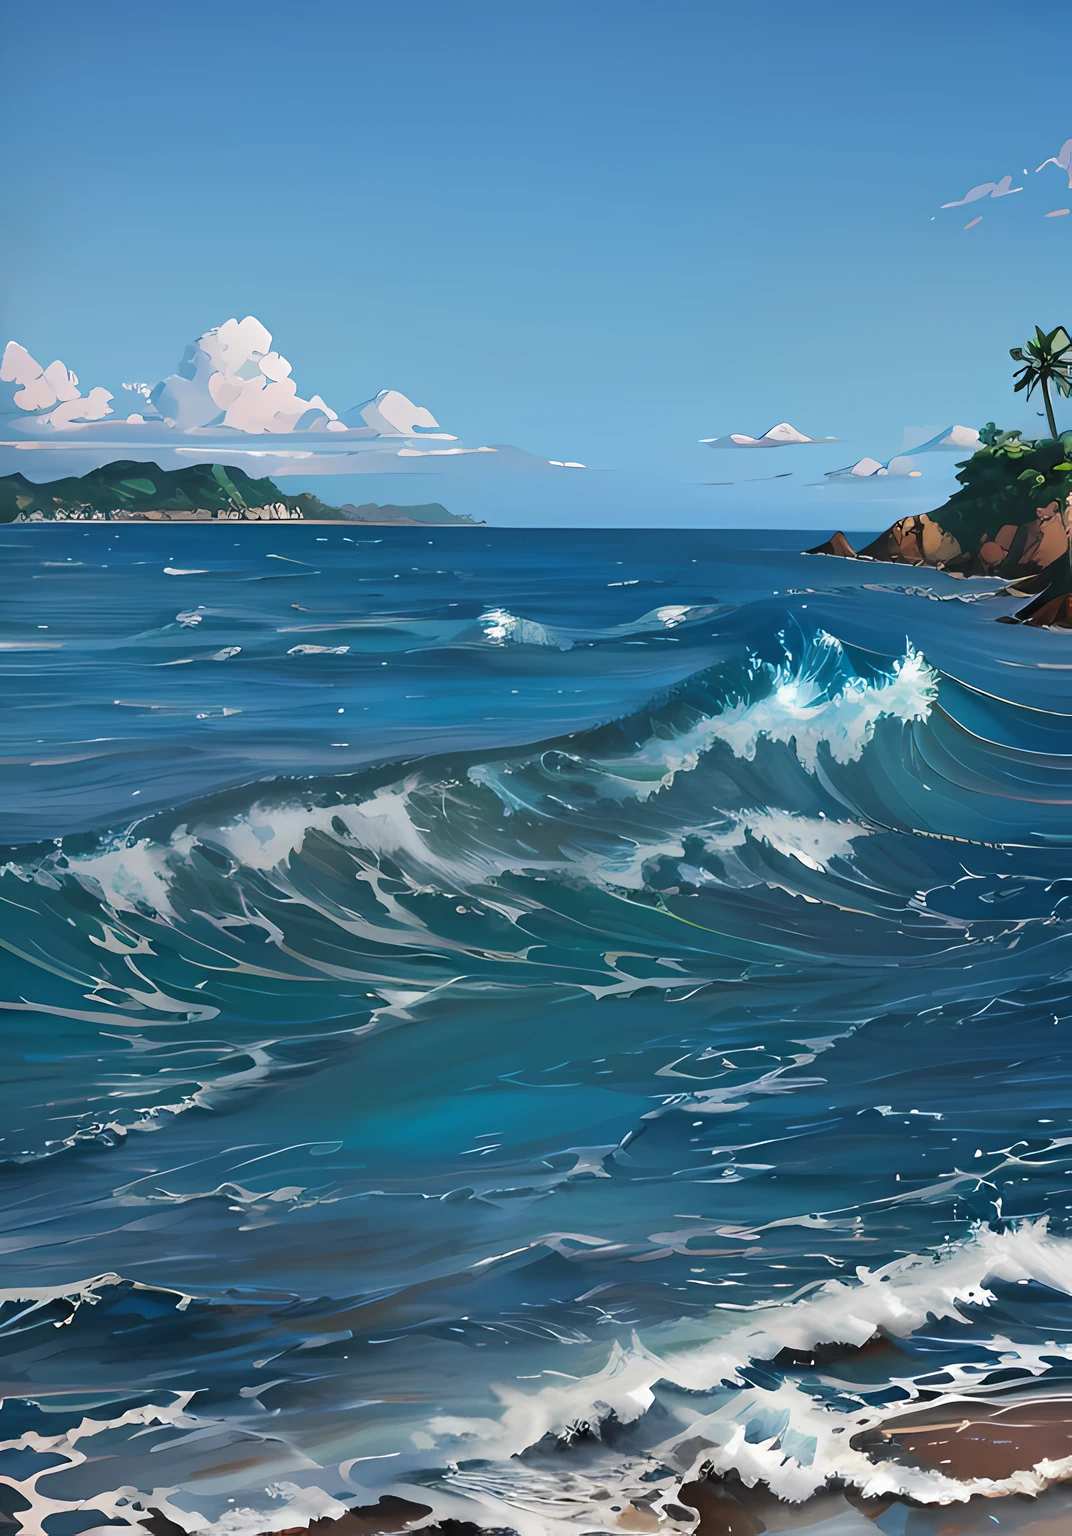 painting of a คลื่น breaking on a beach with a small island in the background, มหาสมุทรที่สมจริง, highly การวาดภาพดิจิตอลที่มีรายละเอียด, very การวาดภาพดิจิตอลที่มีรายละเอียด, การวาดภาพดิจิตอลที่มีรายละเอียดสูง, ภาพวาดสีน้ำมัน. คลื่น, azure คลื่นs of water, การวาดภาพดิจิตอลที่มีรายละเอียดสูง, น้ำที่สมจริง, ภาพวาดดิจิตอลที่งดงาม, ภาพวาดดิจิตอลคุณภาพสูง, การวาดภาพดิจิตอลที่มีรายละเอียด, ภาพวาดดิจิตอลที่สวยงาม, ภาพวาดดิจิตอลที่น่าทึ่ง